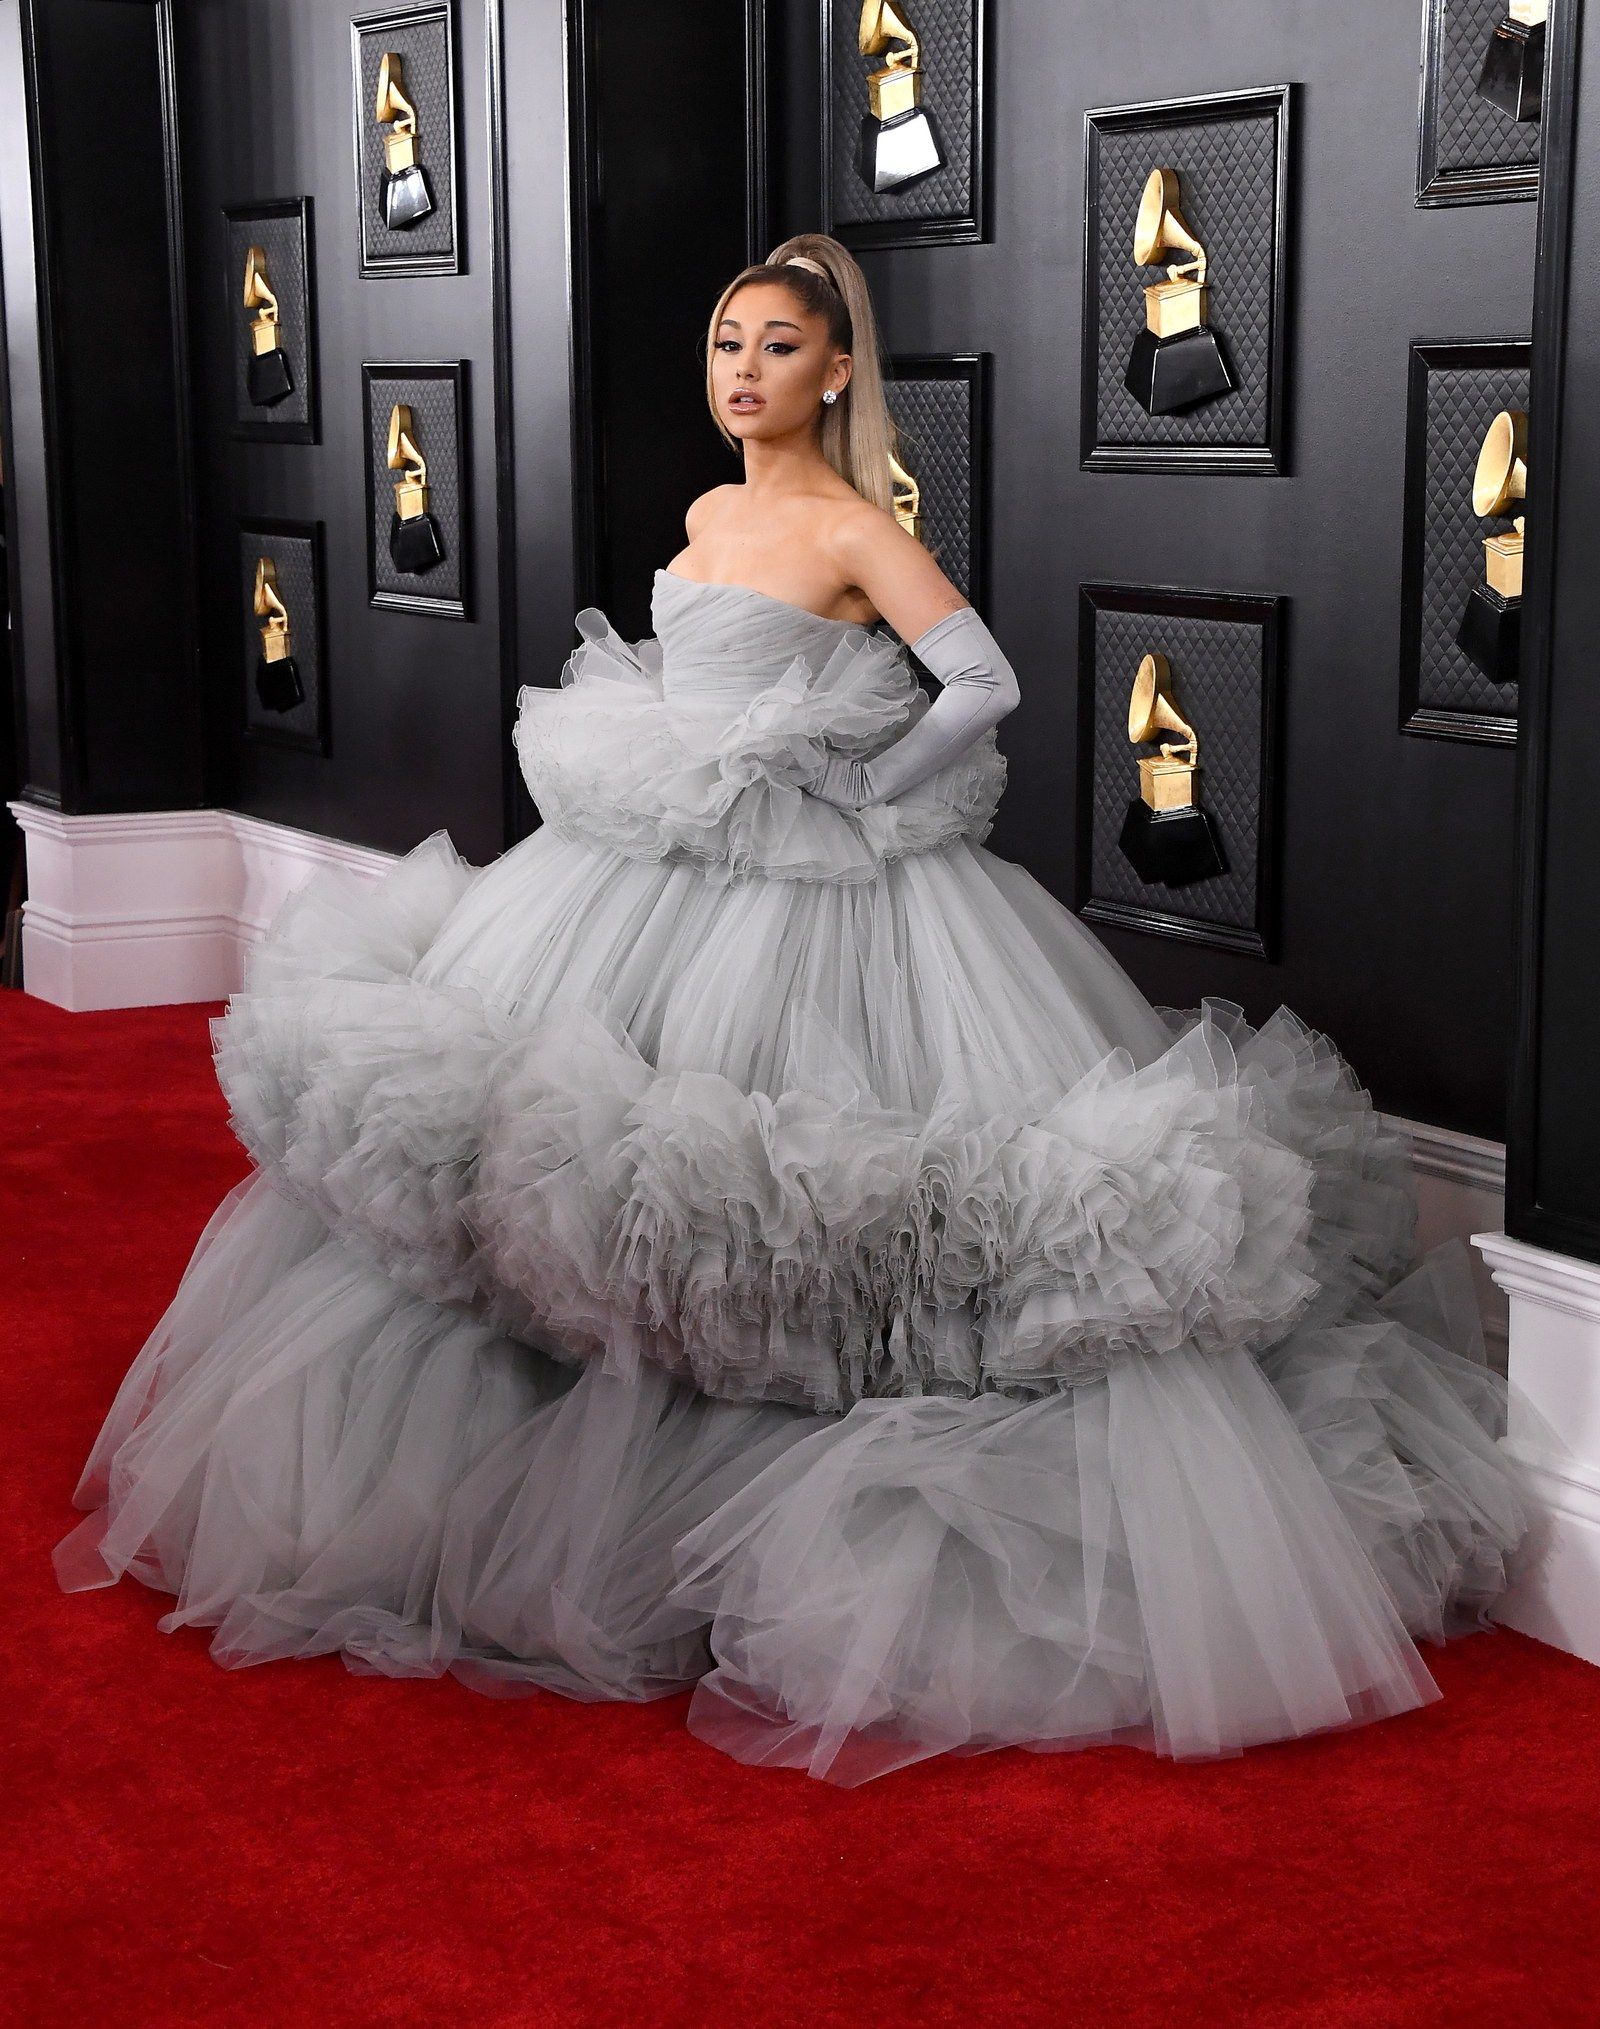 Ariana Grande in Giambattista Valli at the Grammys 2020 (Photo credit: Getty Images)